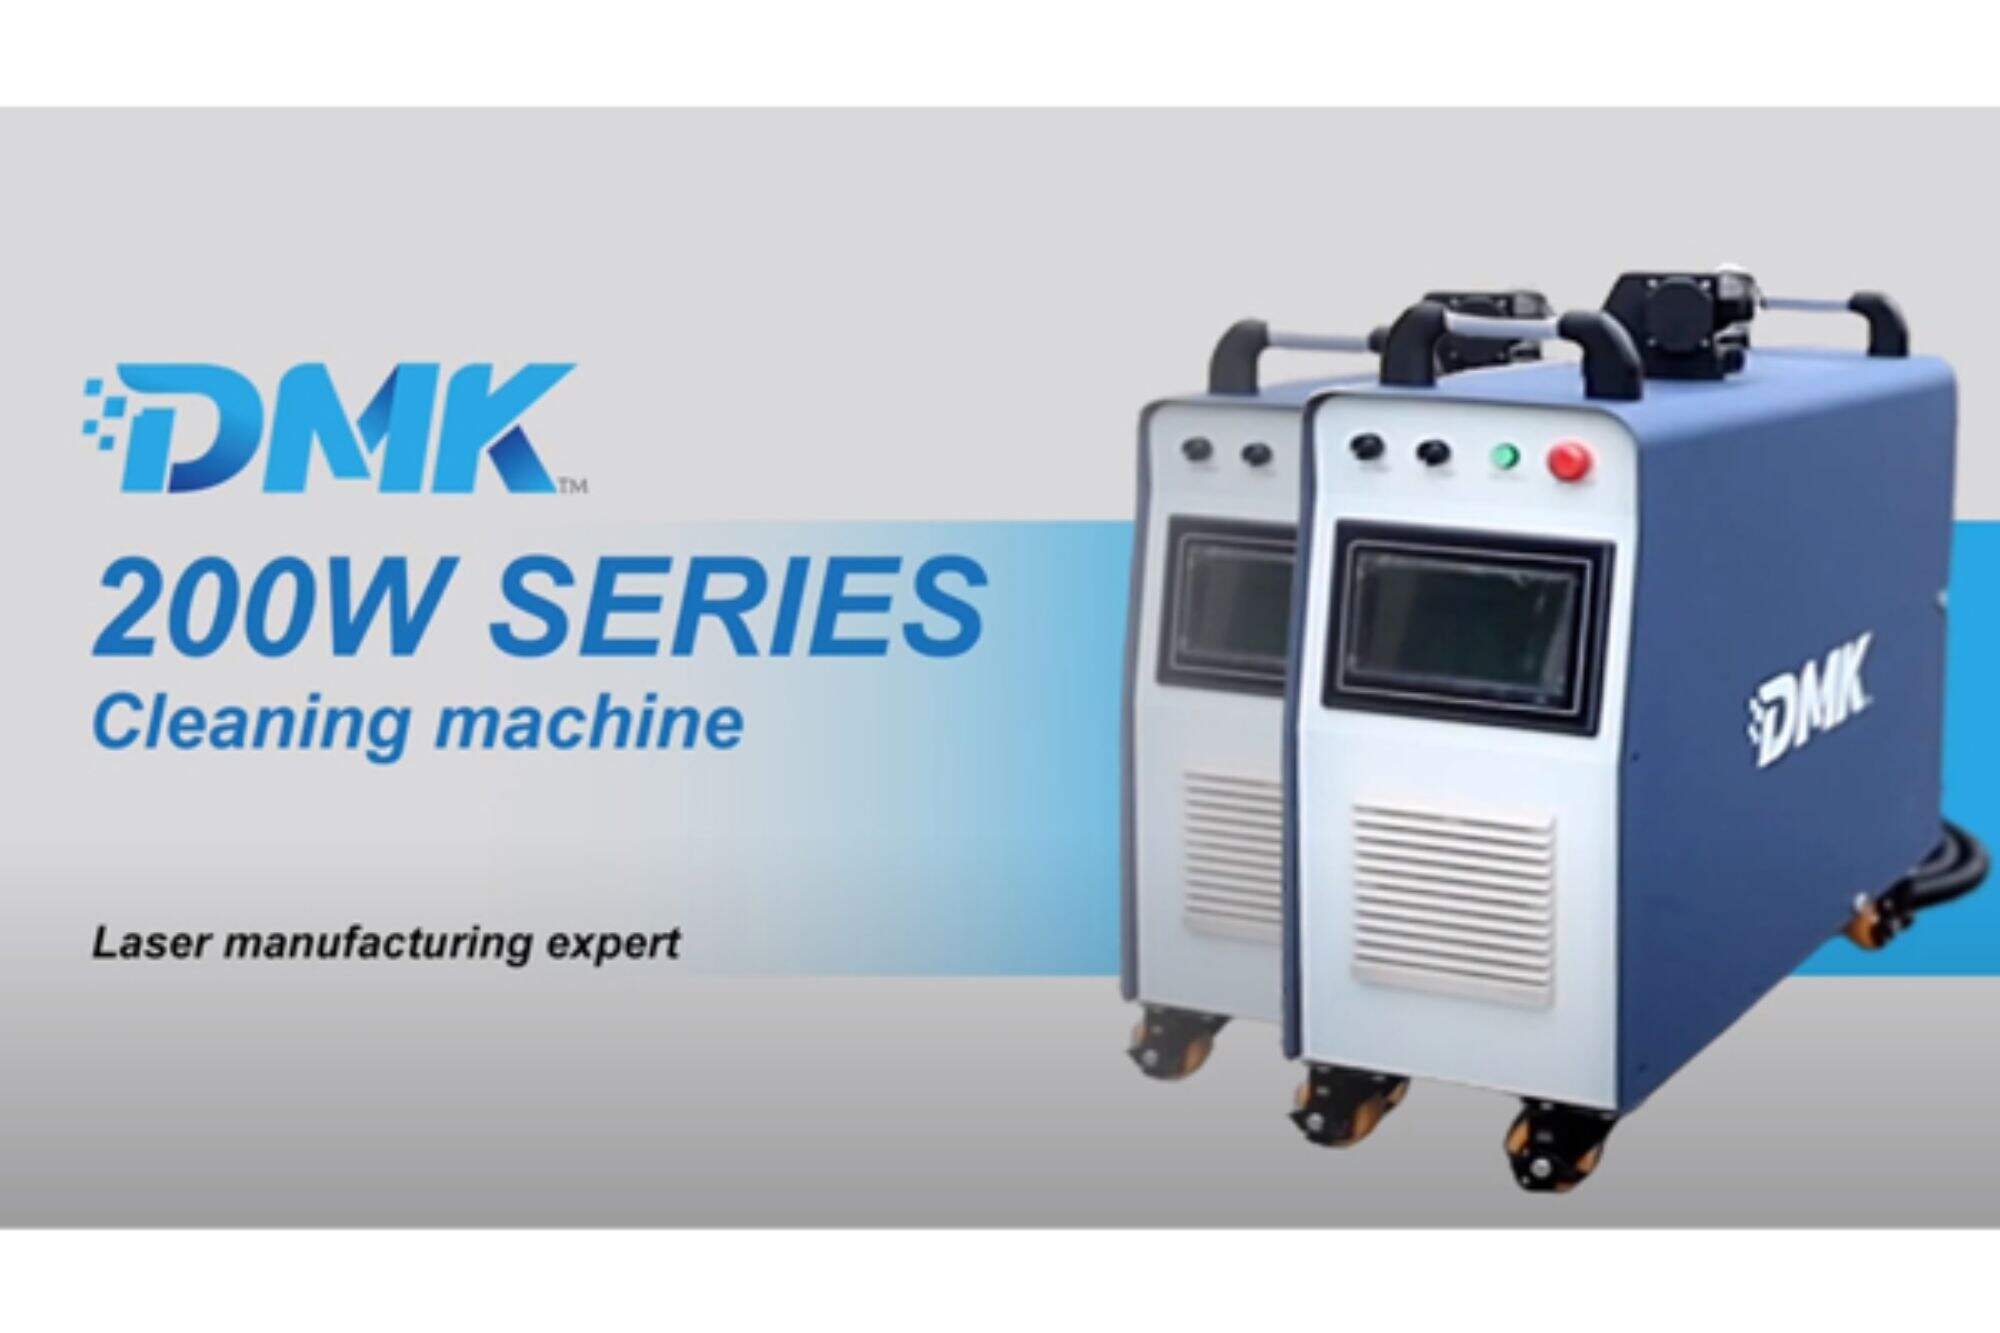 DMK 200w darbeli lazer temizleme makinesi